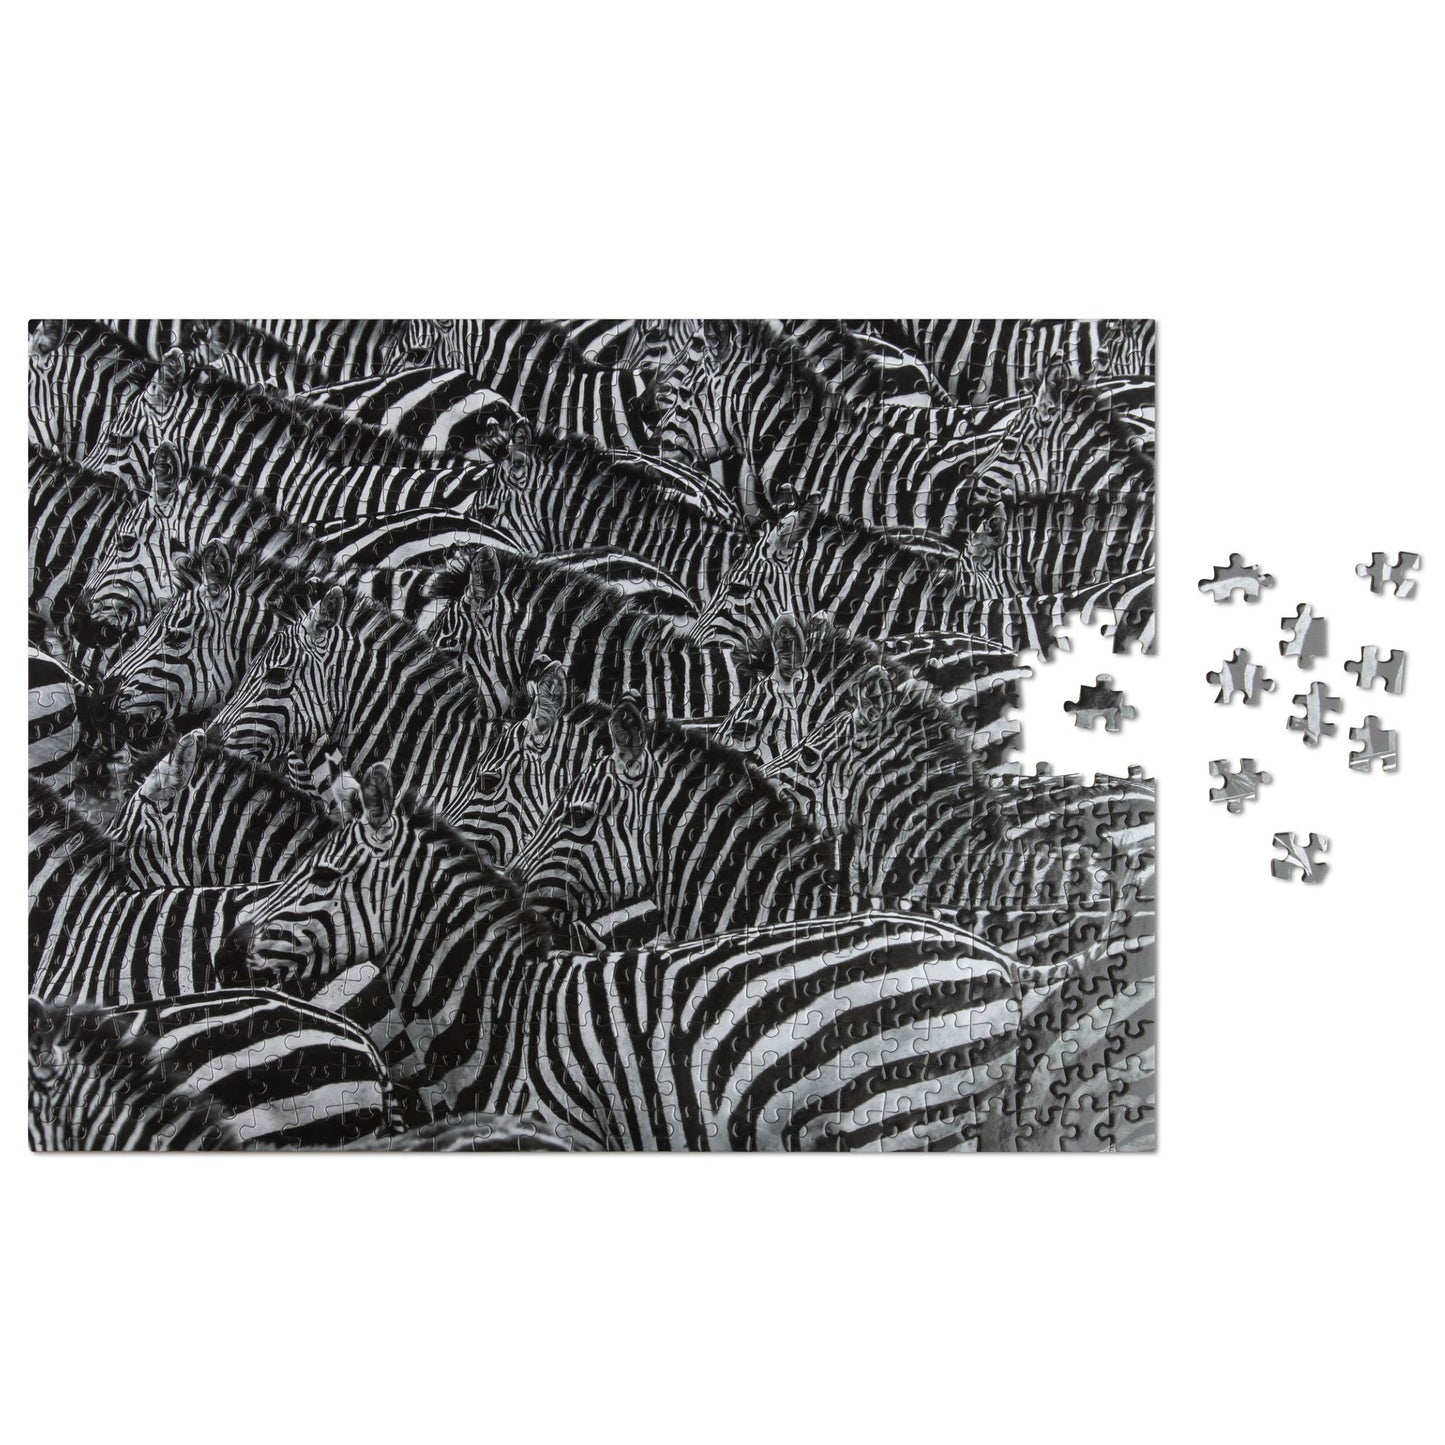 Printworks Puzzle Wildlife Pattern, Zebra